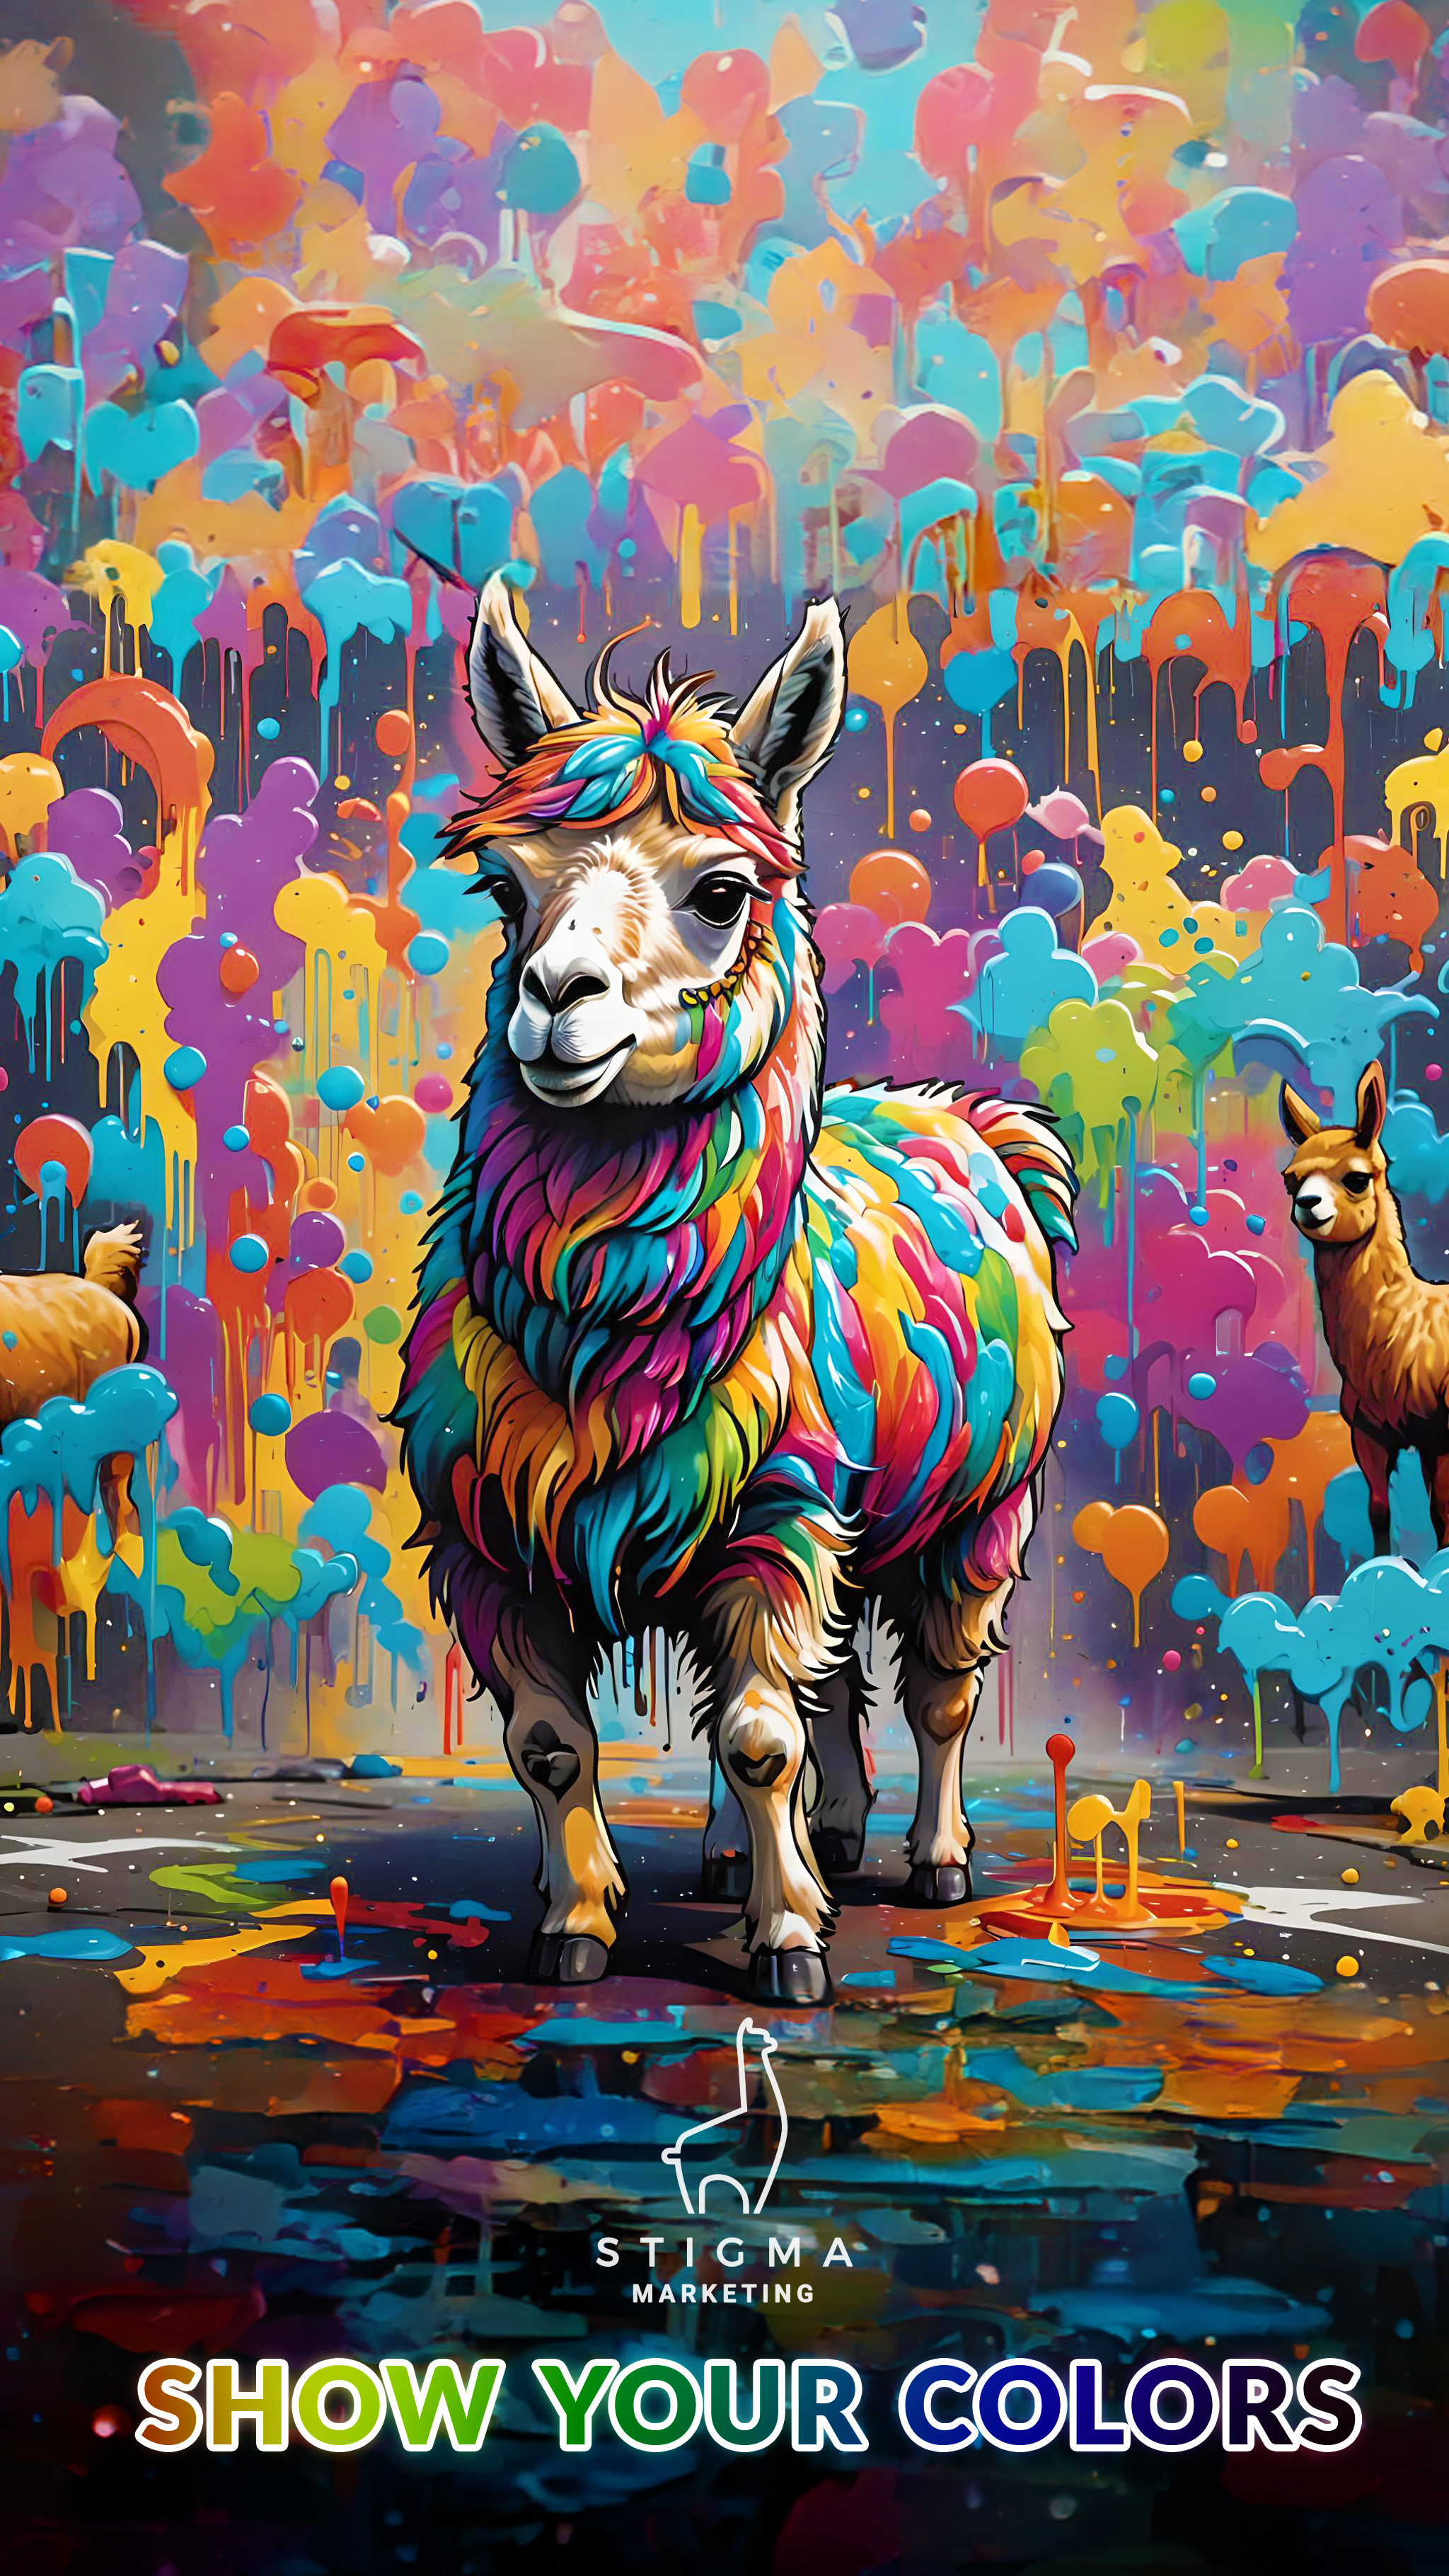 rainbow llama-pride - show your colors - stigma marketing